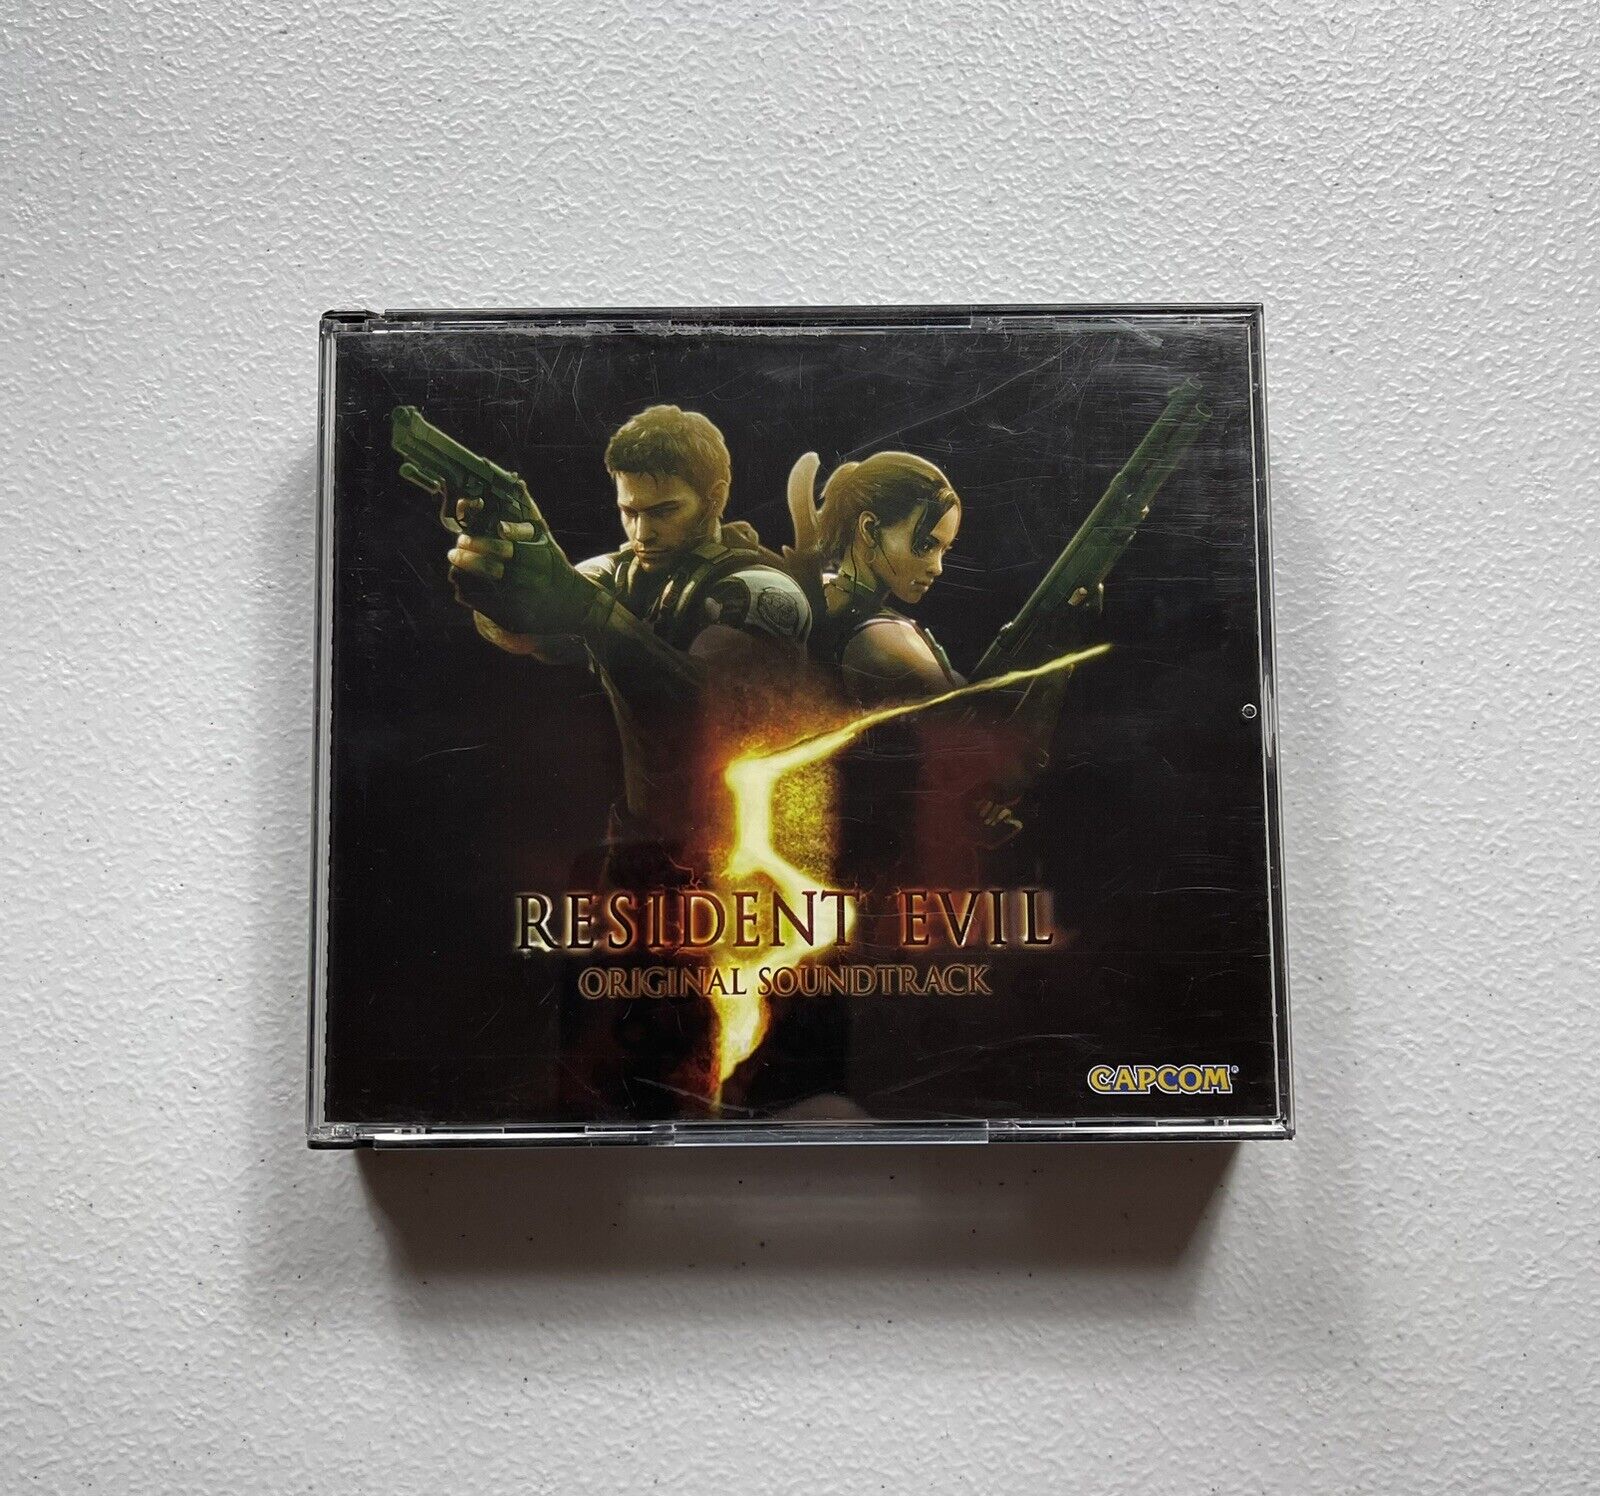 Resident Evil 5 (Original Soundtrack, 3 CD, CAPCOM, SUMTHING, 2009) Complete CIB